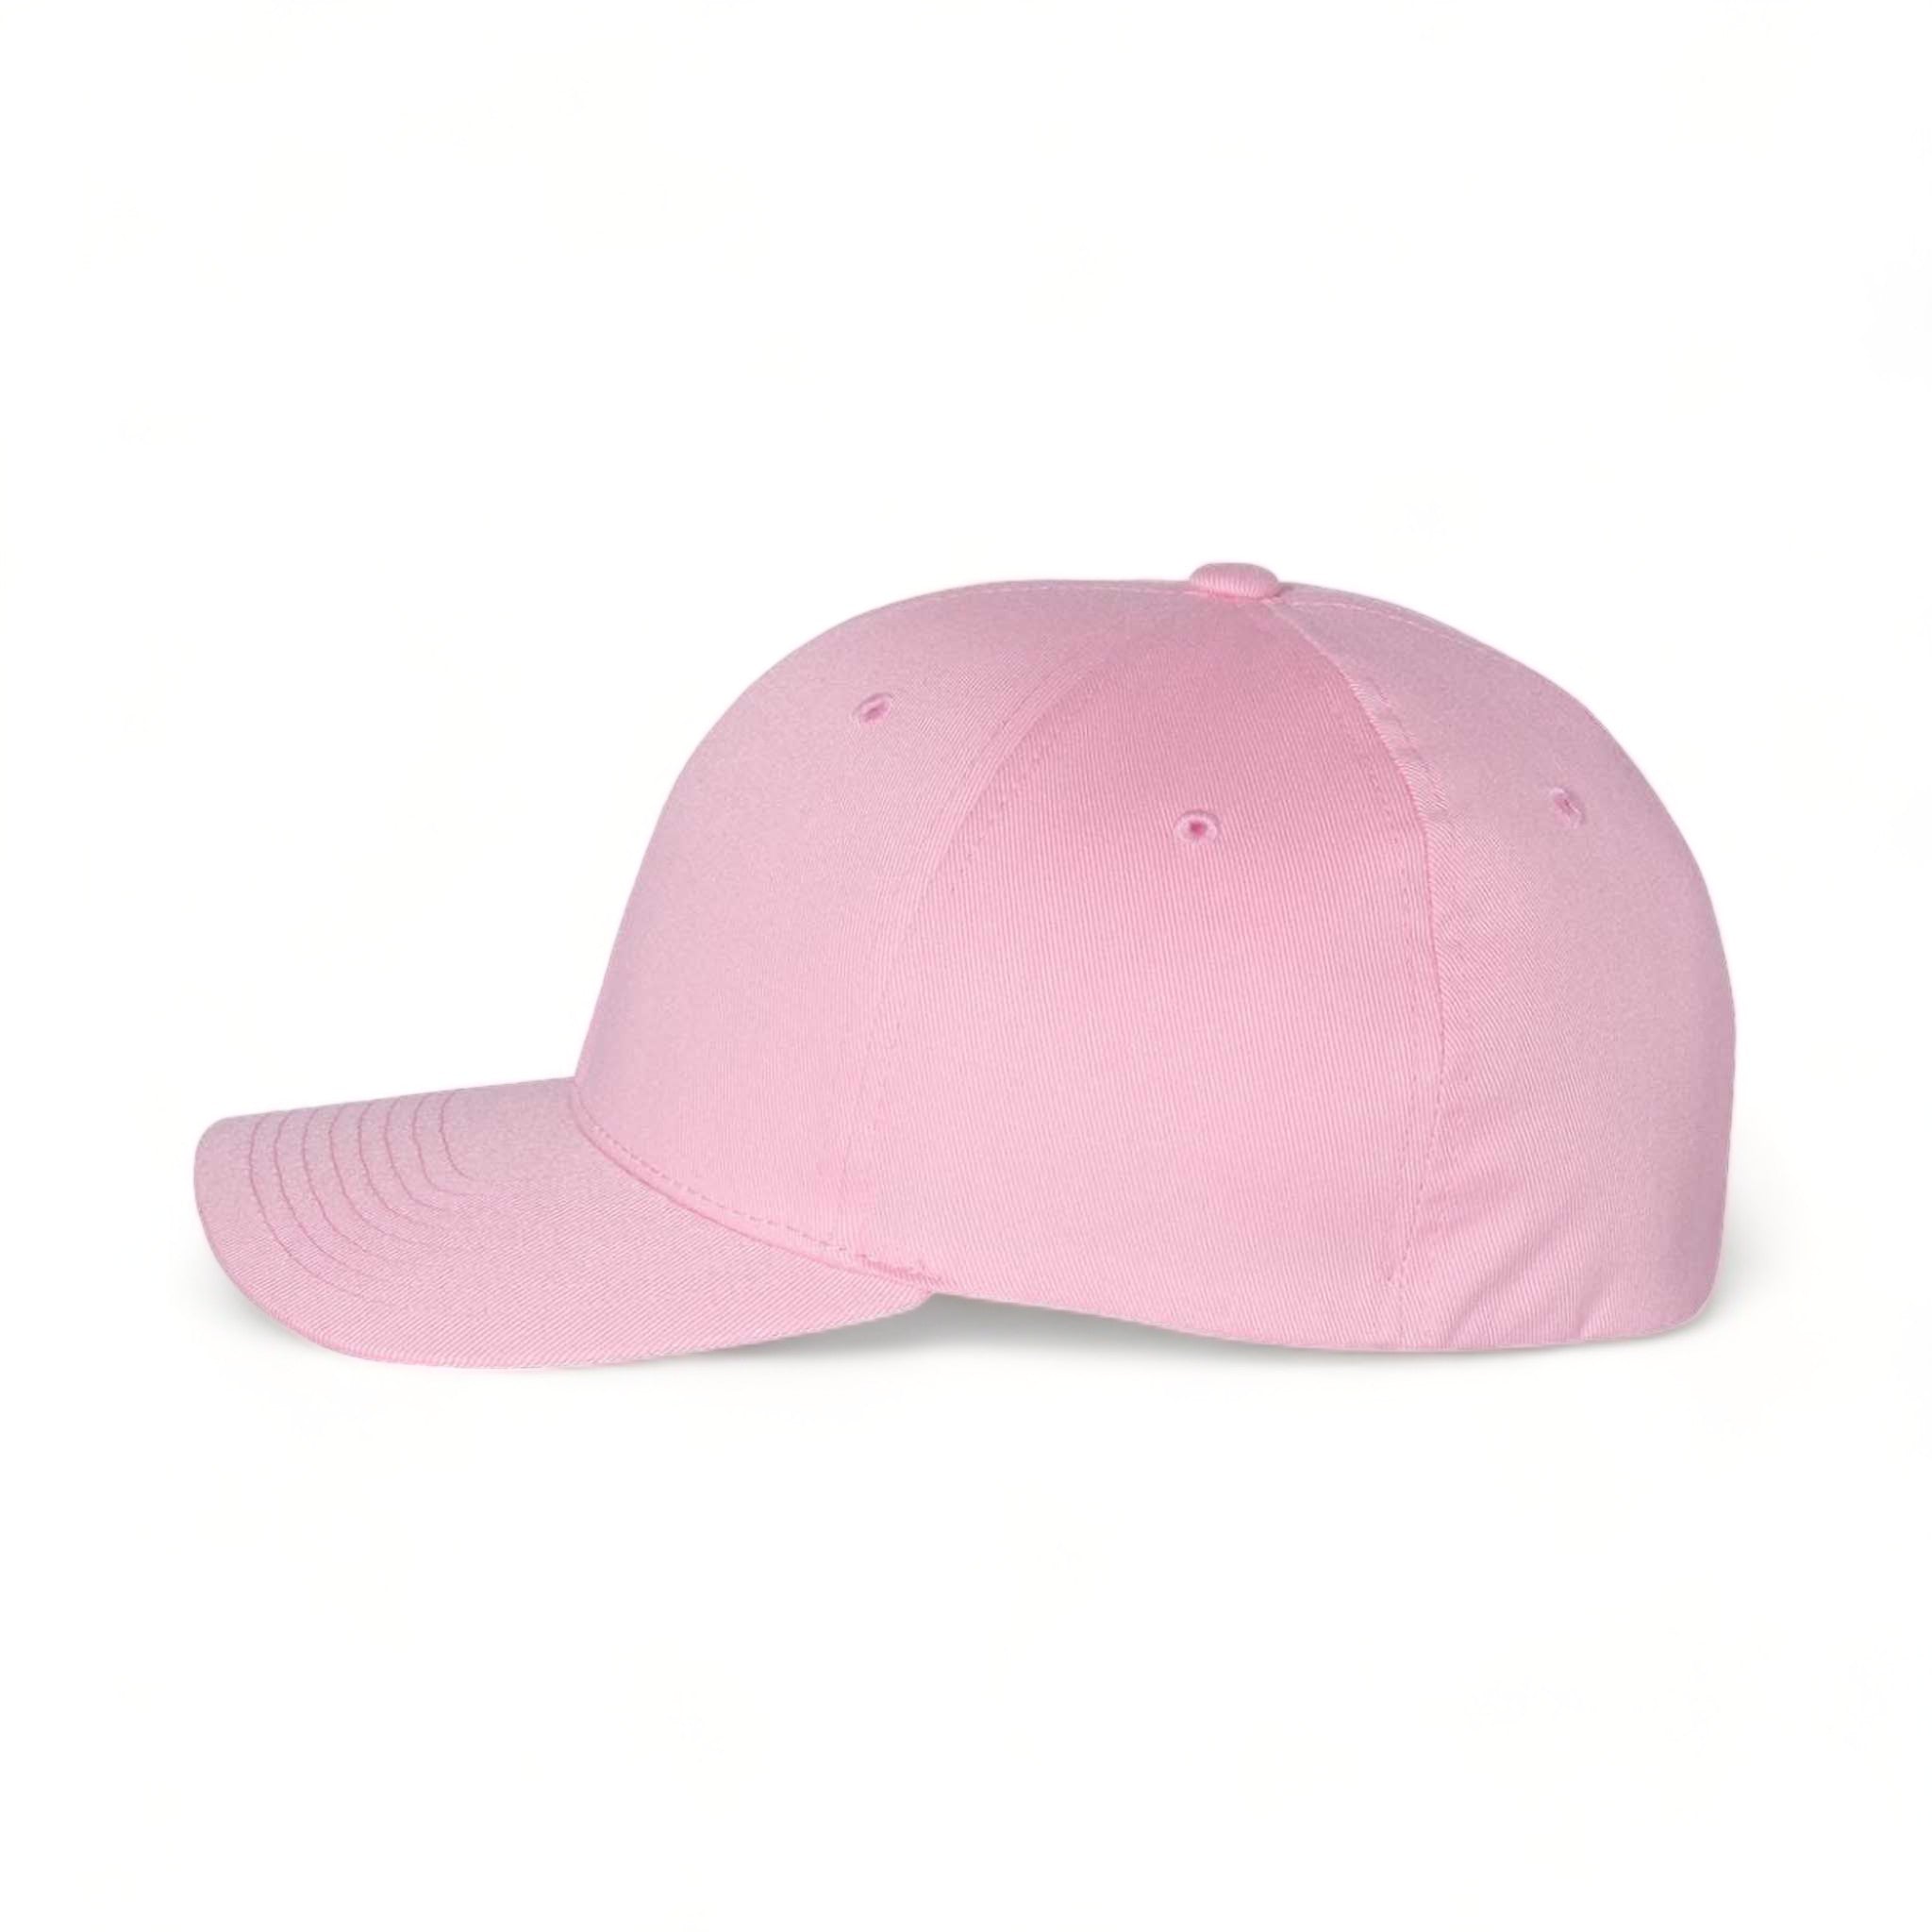 Side view of Flexfit 6277 custom hat in pink